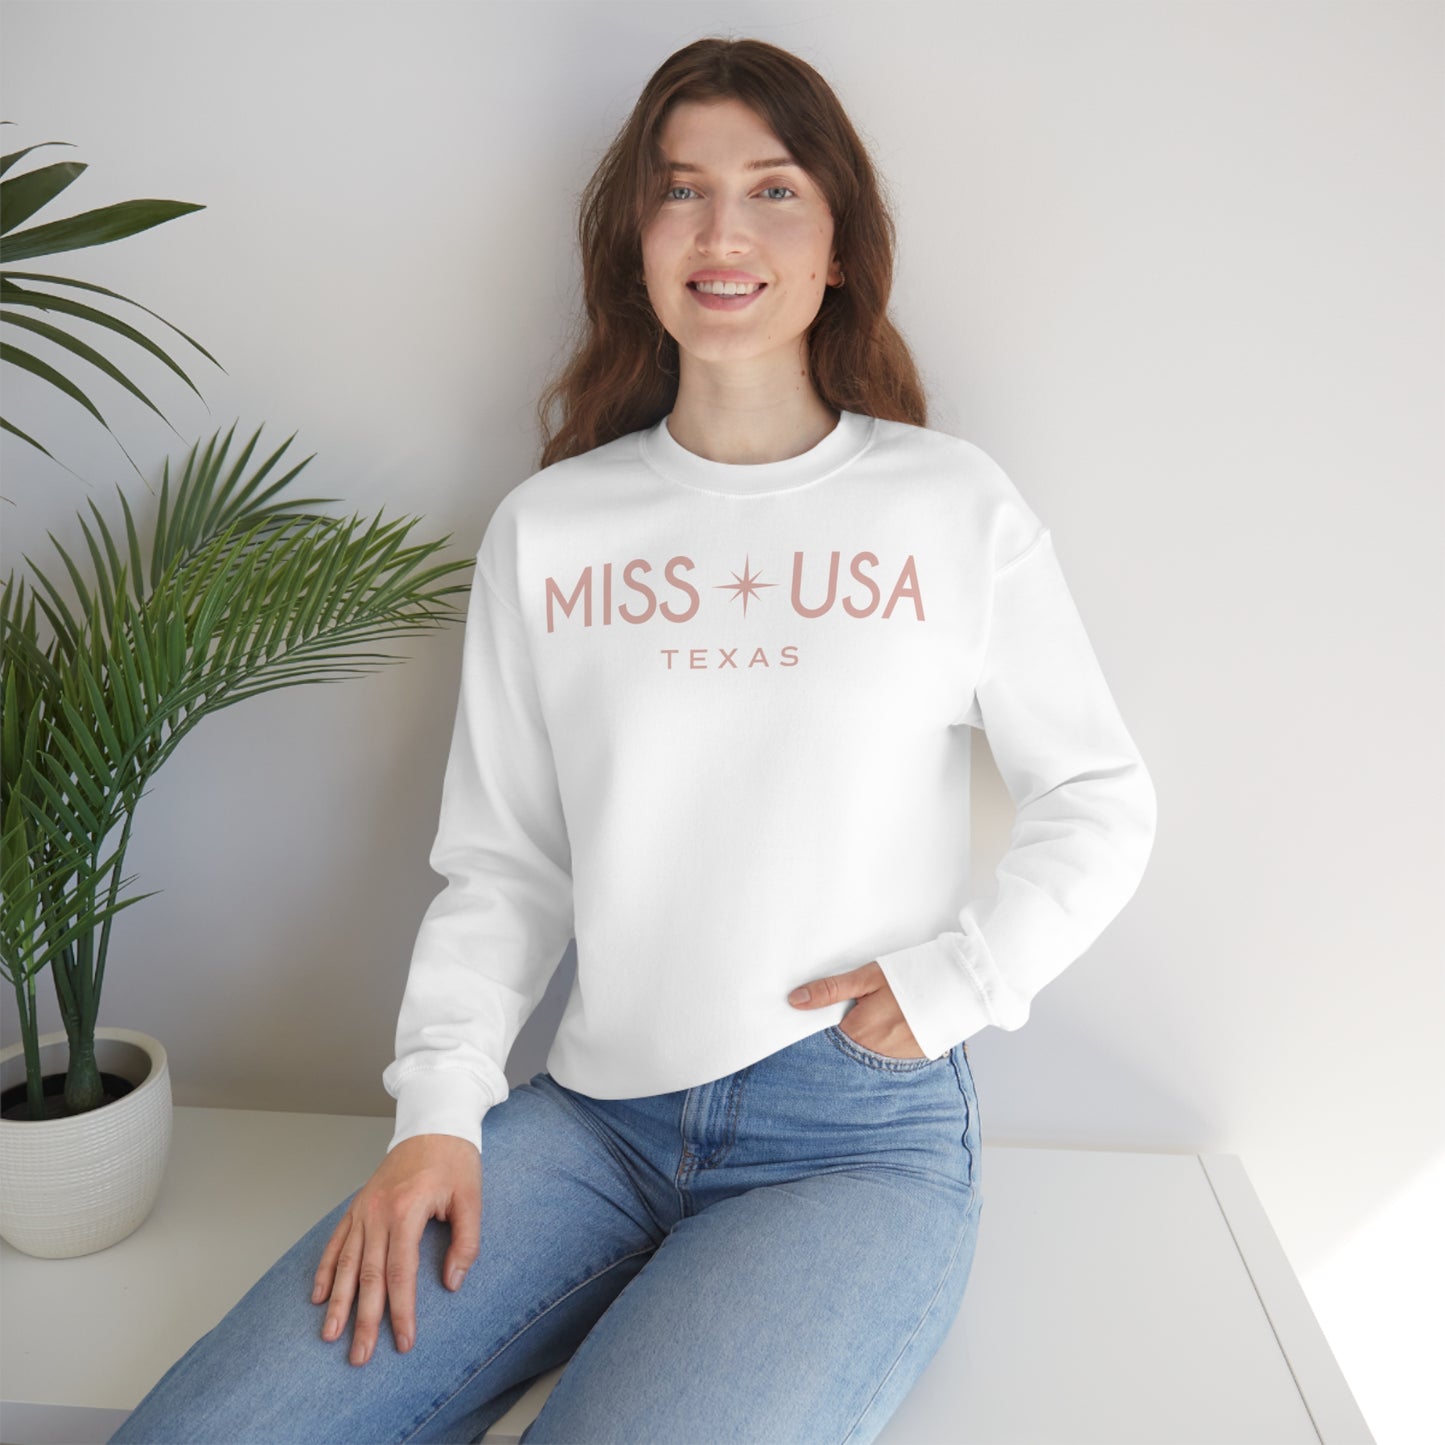 Single Logo Sweatshirt - Miss Texas USA